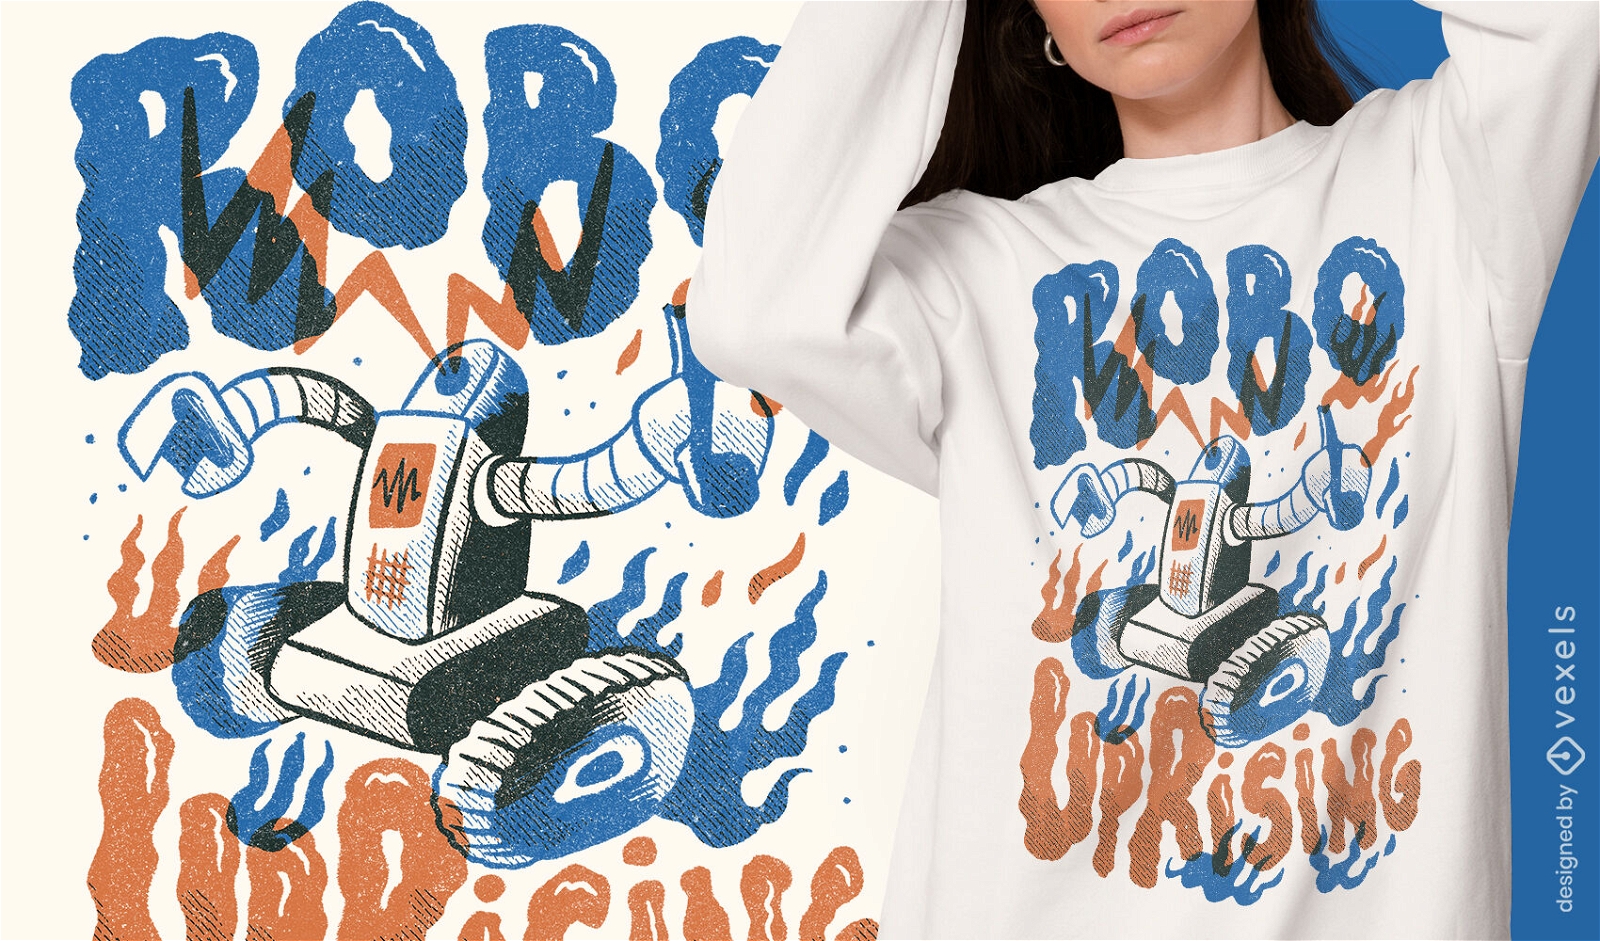 Vintage robot villain t-shirt design